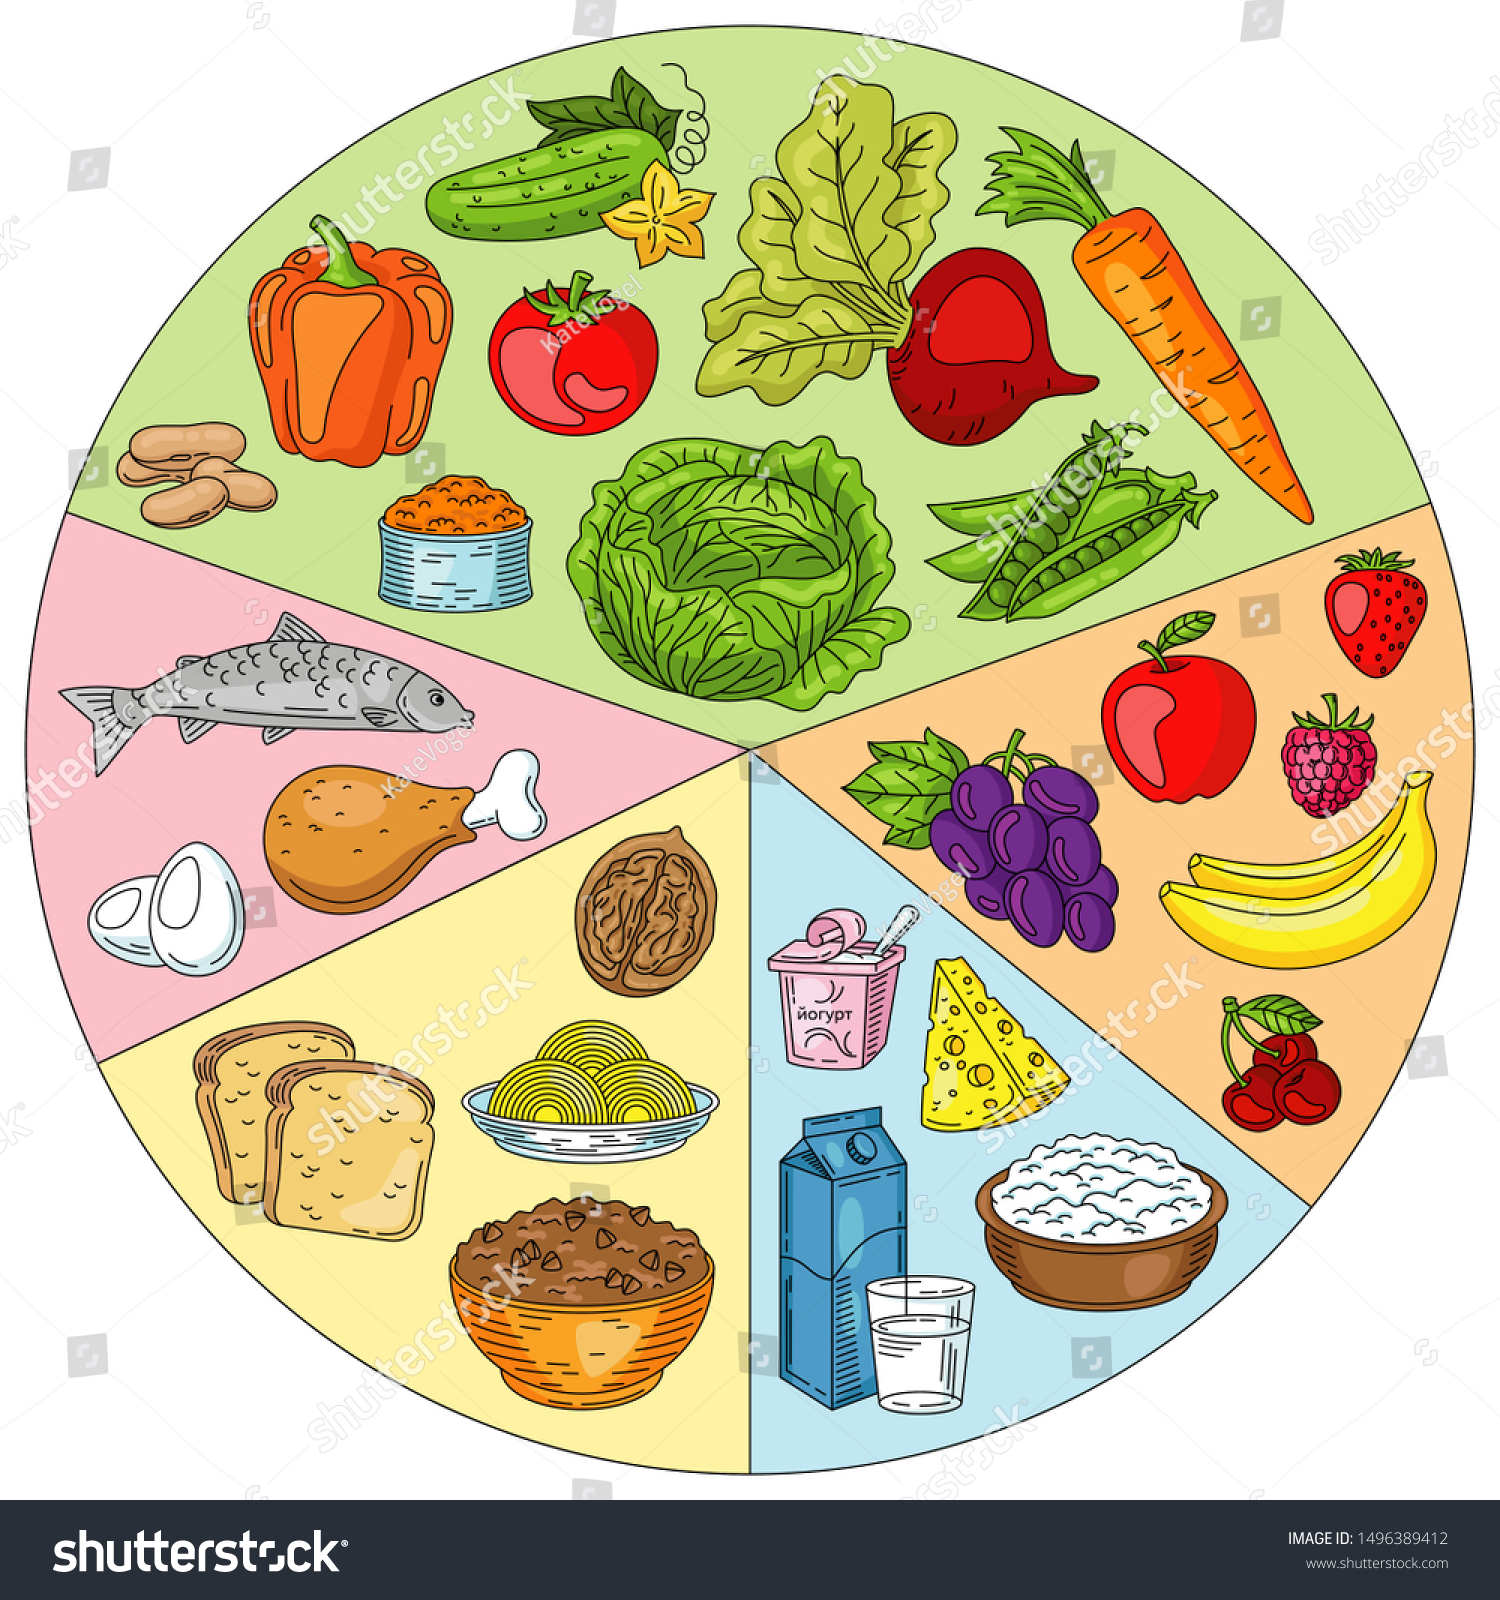 Healthy Food Plate Set Healthy Food Stock Illustration 1496389412